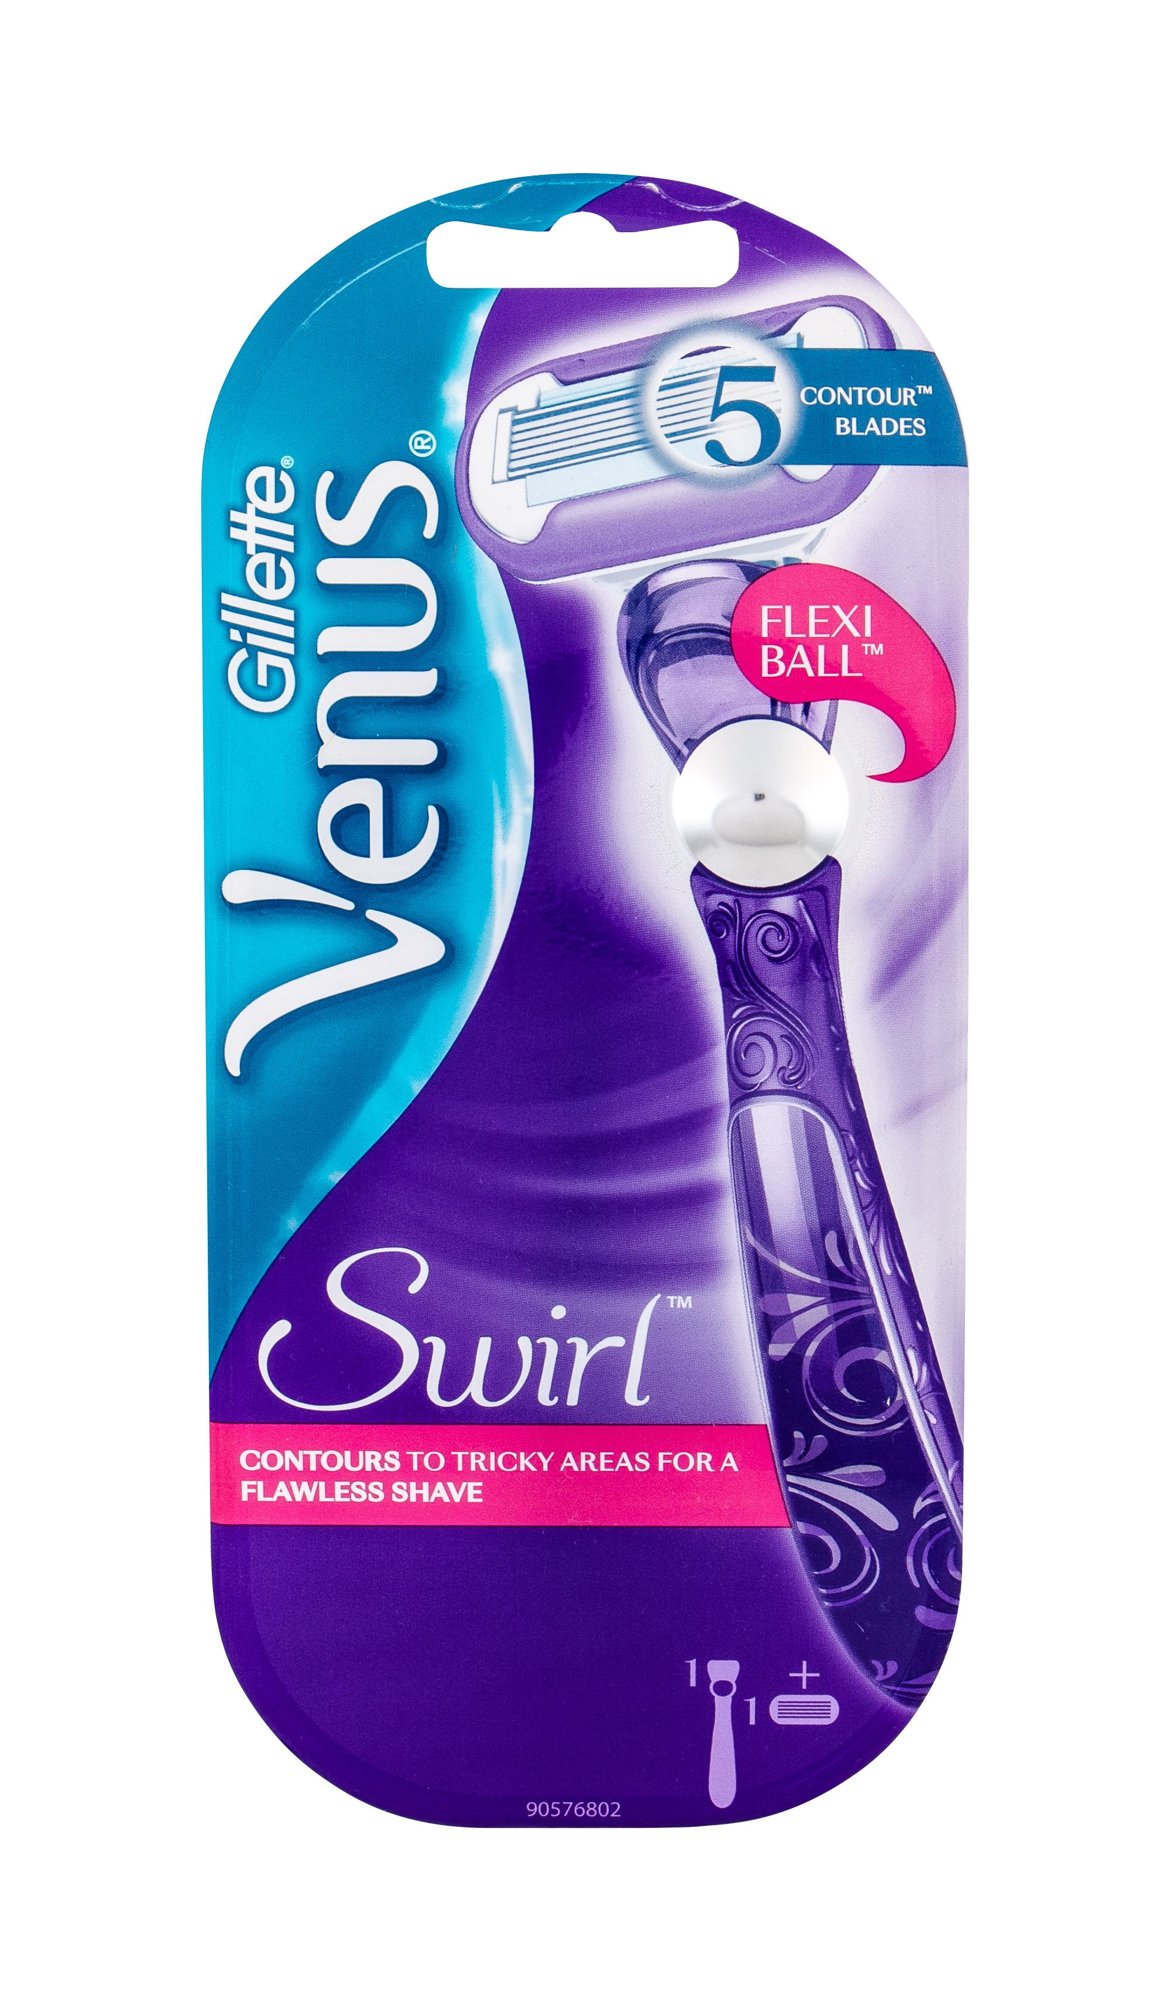 Gillette Venus Swirl